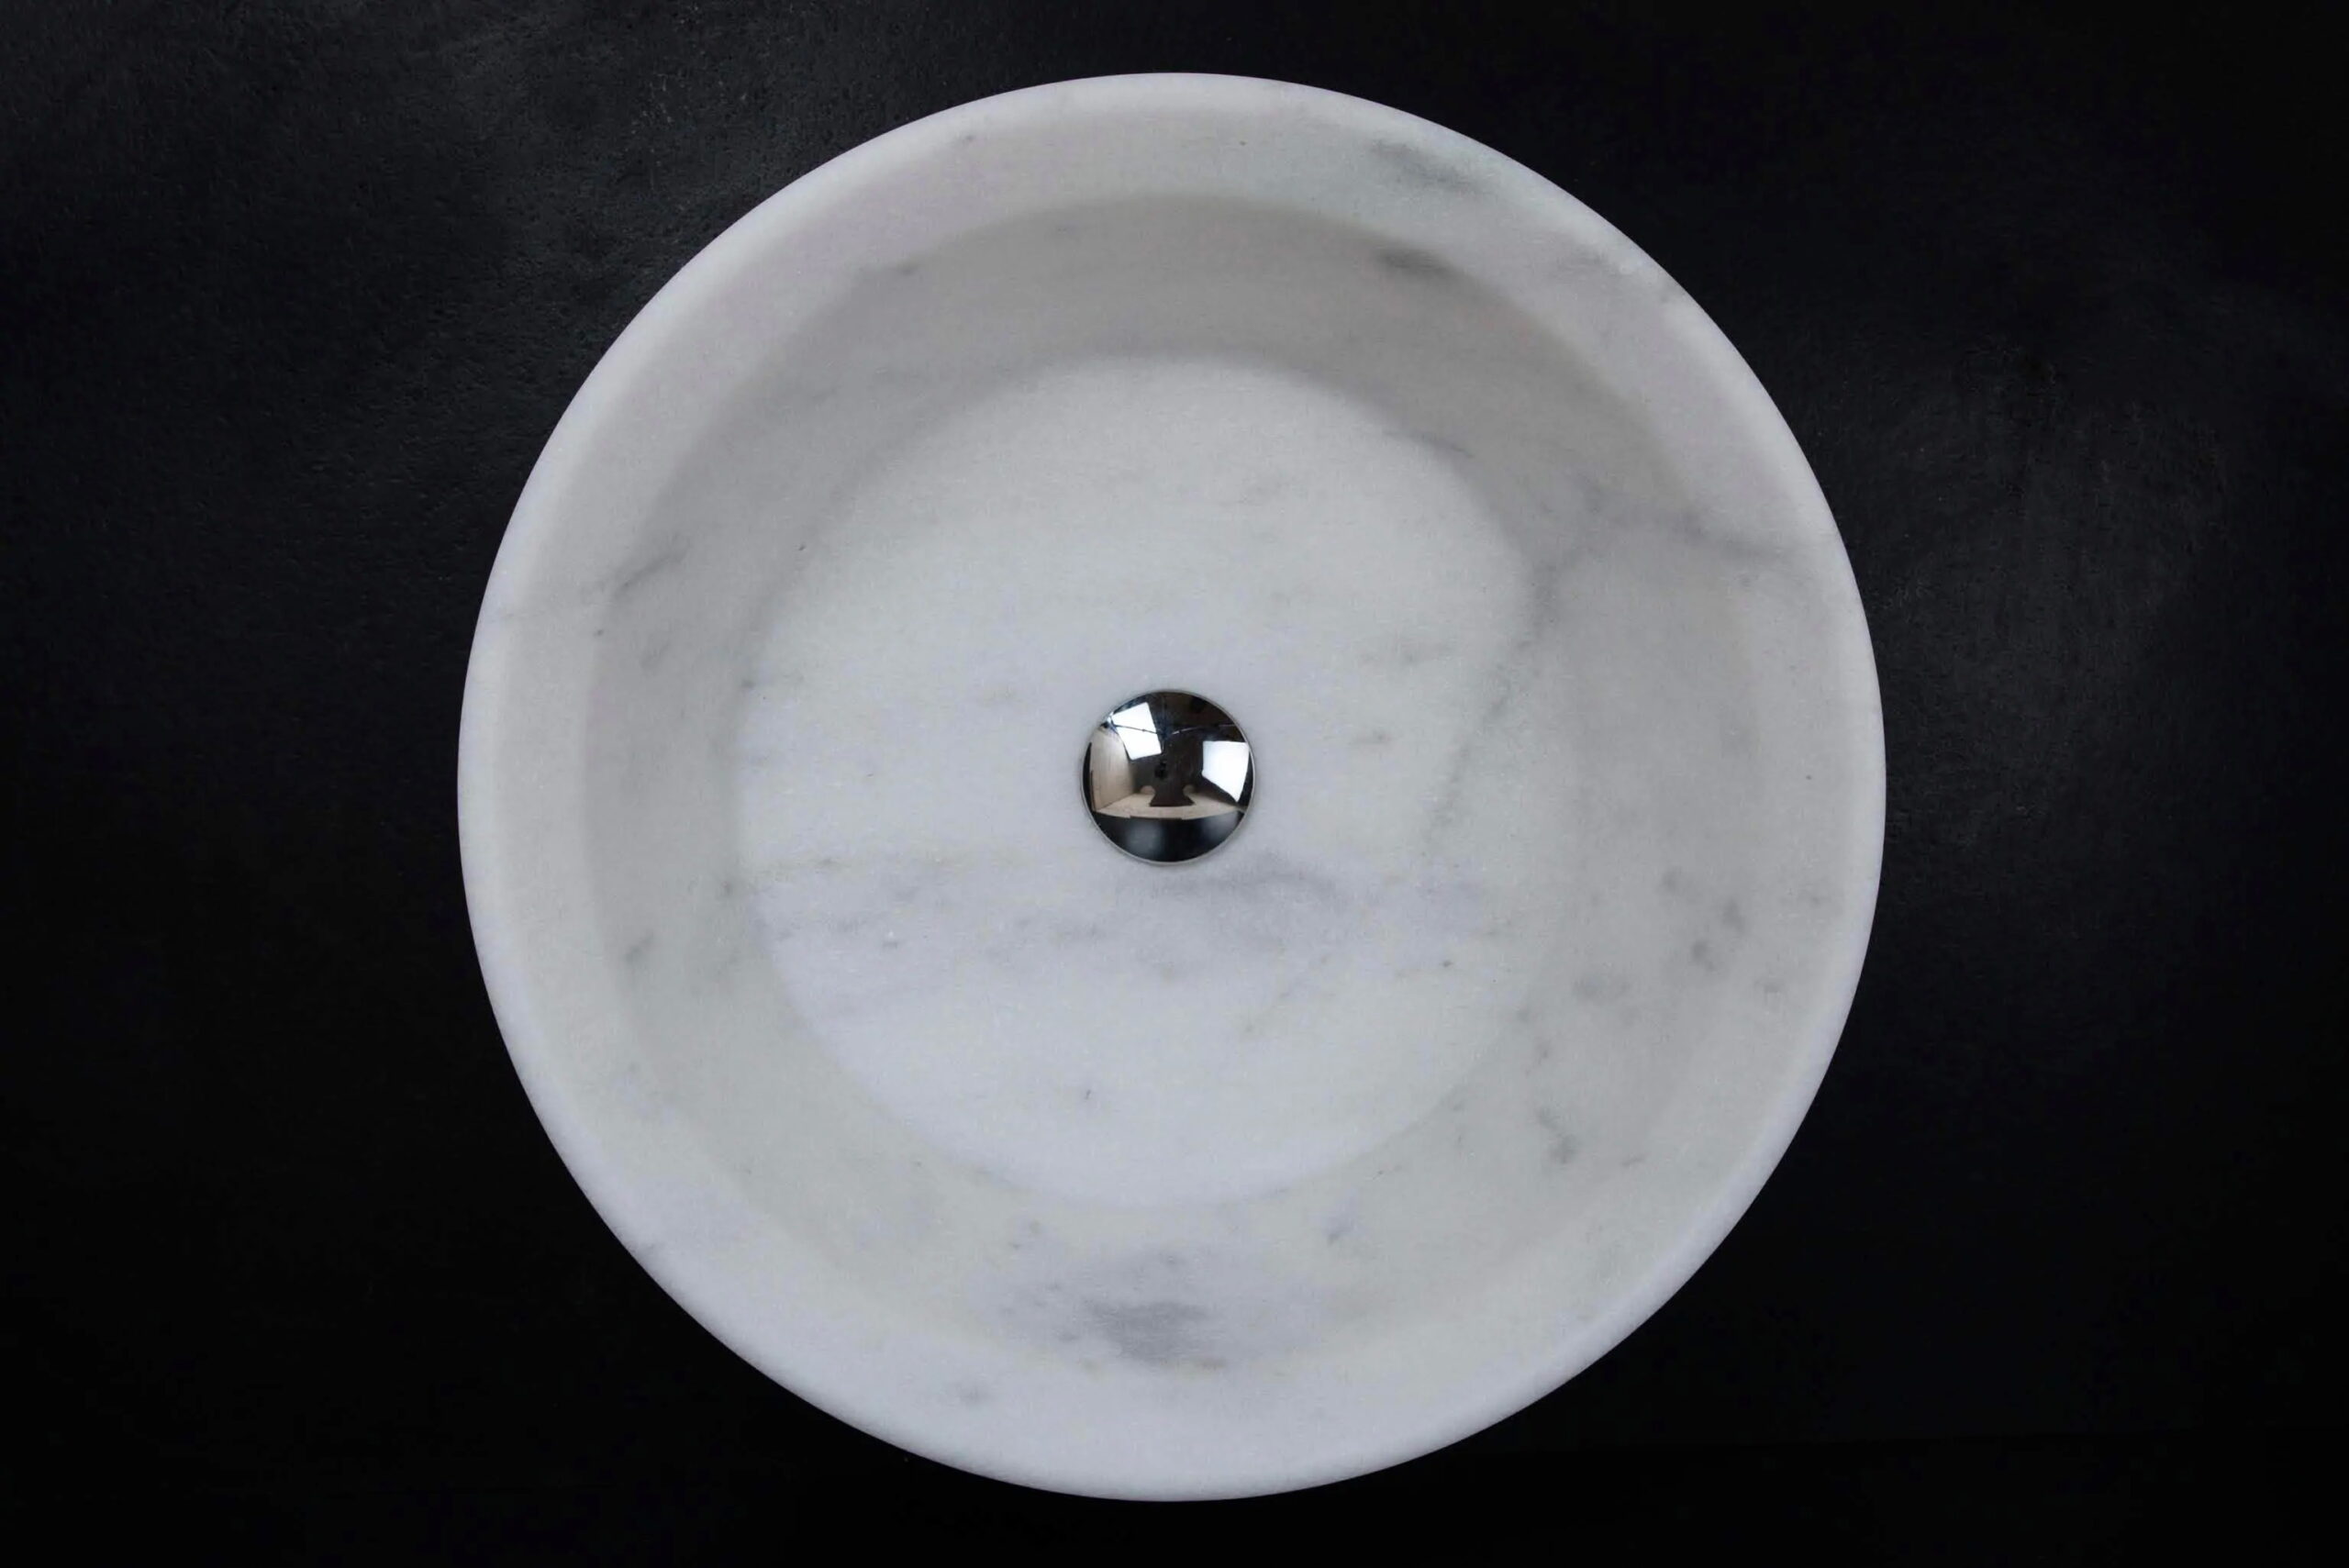 Large round marble washbasin “Simple CT”